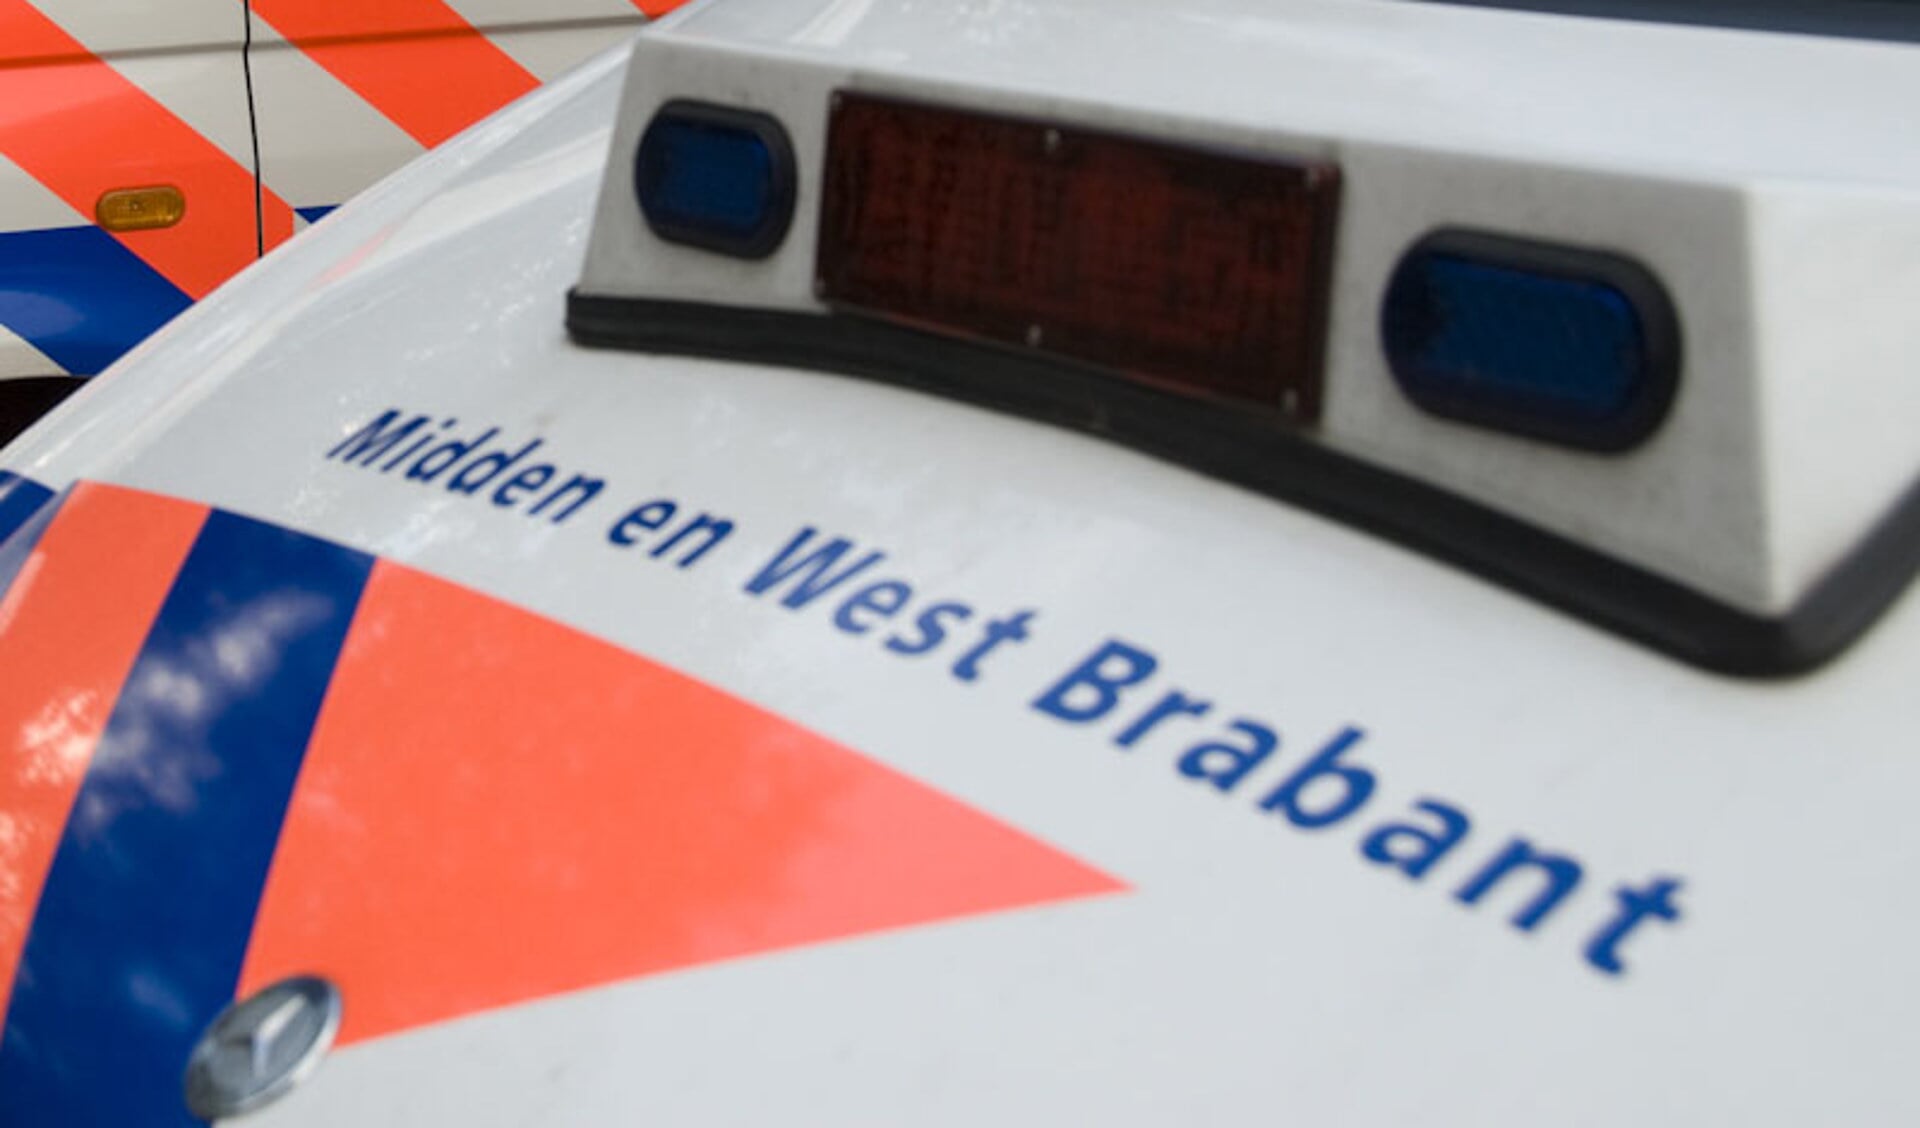 Politie zoekt getuigen inbraak zaterdag in woning Heinsiusstraat Breda